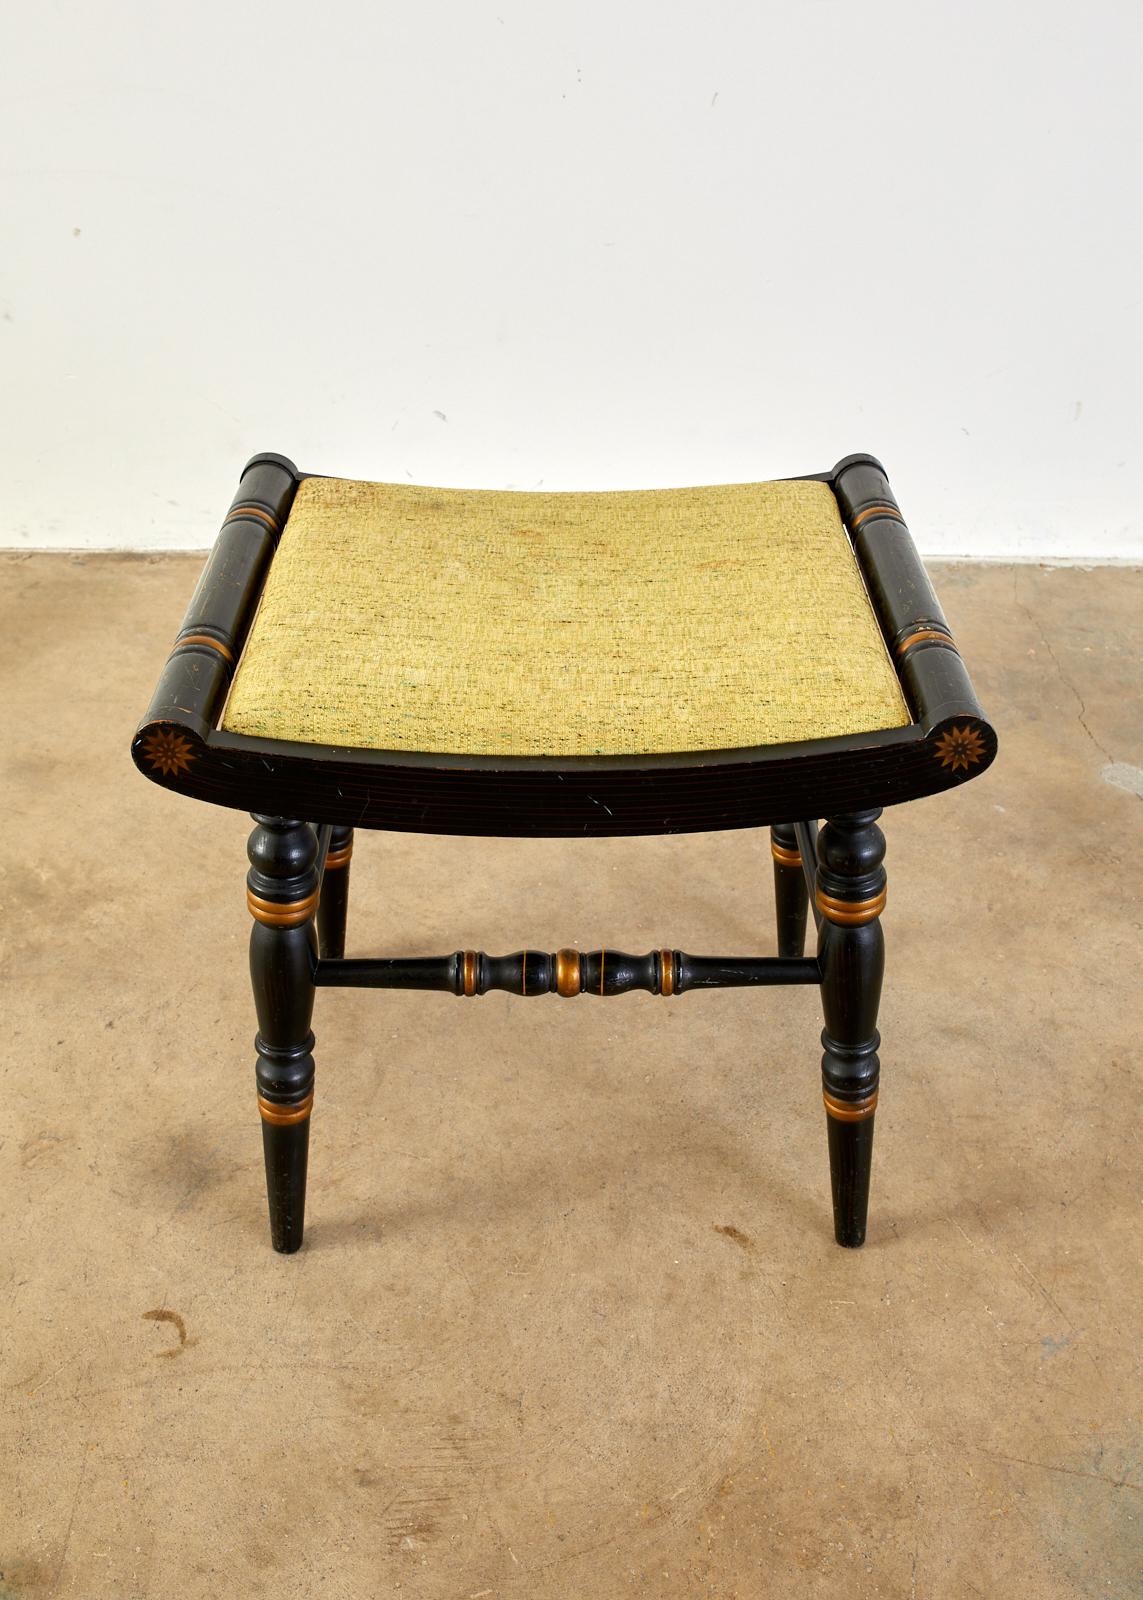 hitchcock stools